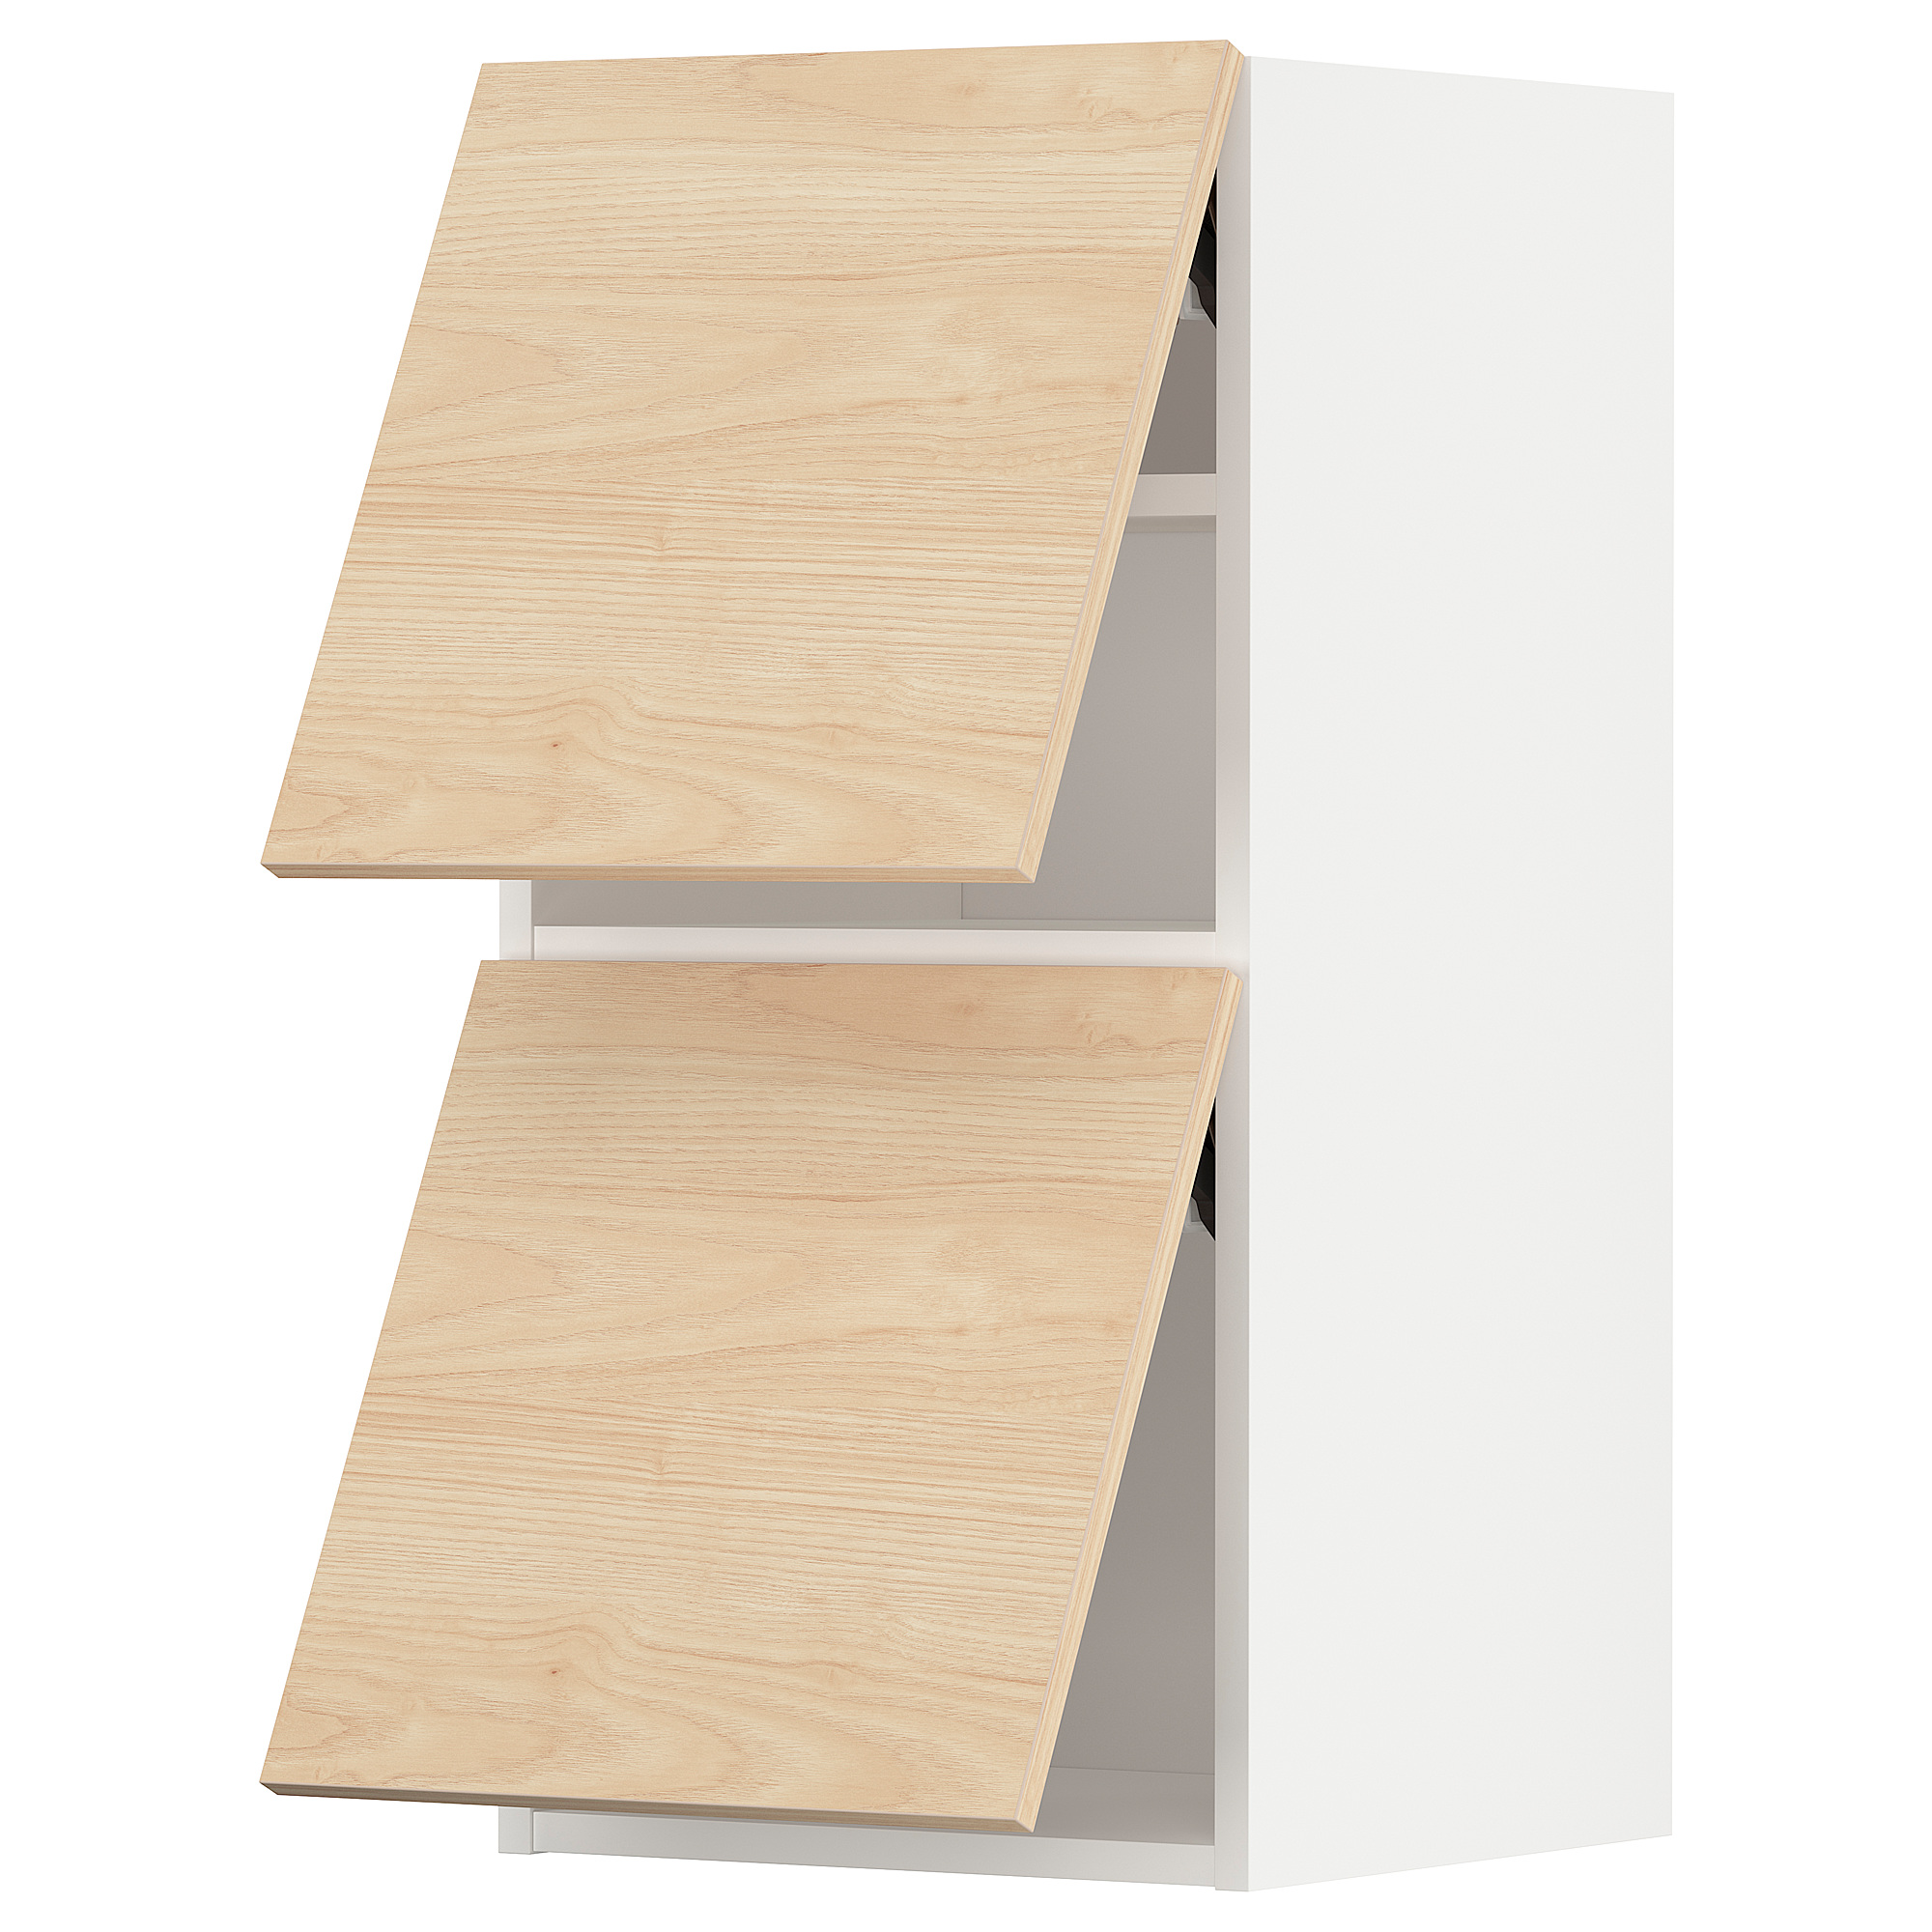 METOD wall cabinet horizontal w 2 doors